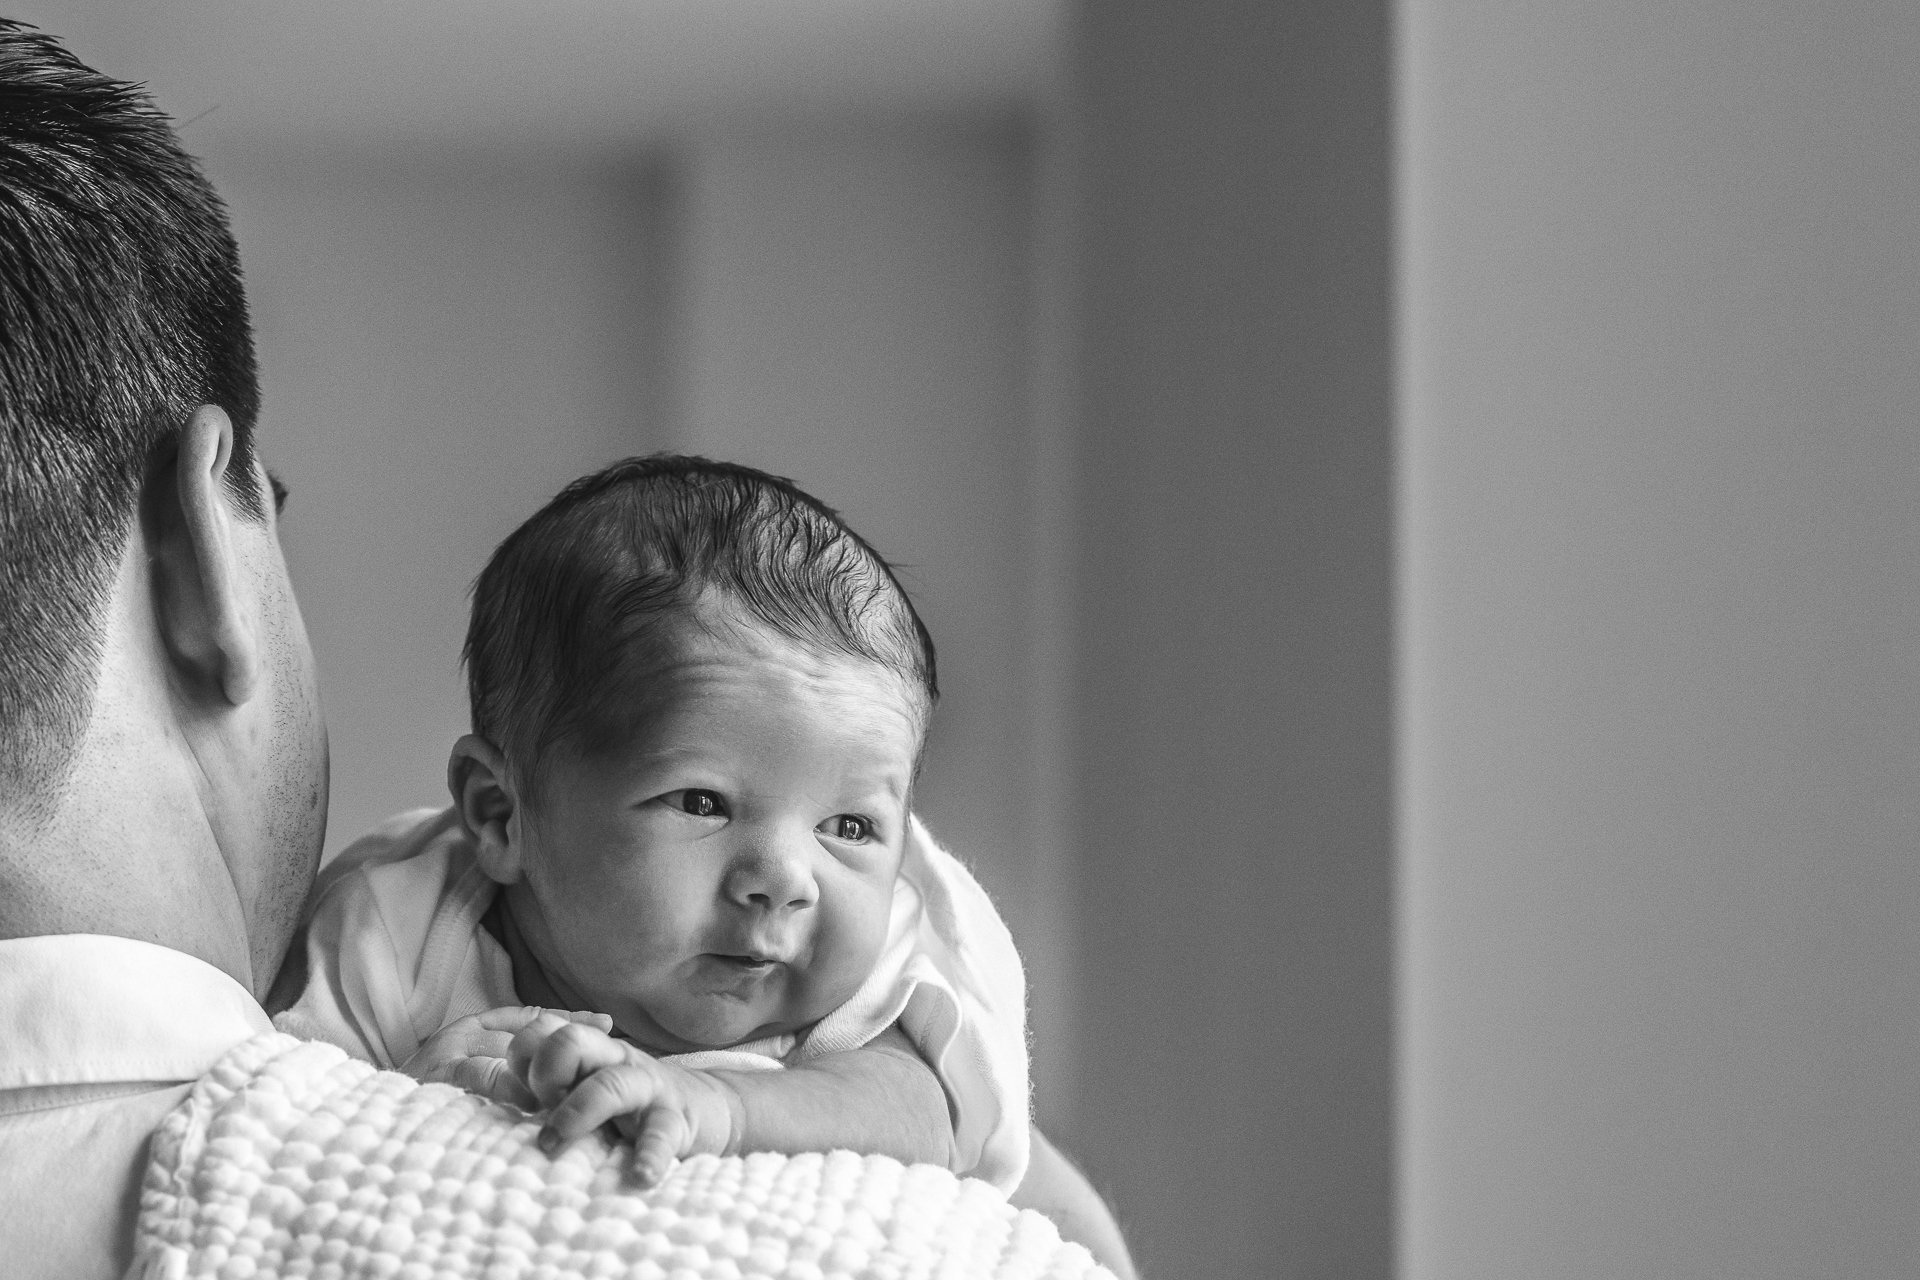  Nicole Hawkins Photography captures a newborn boy with black hair and eyes open. cute newborn pics newborn in-home portraits NYC newborn photos #nicolehawkinsphotography #NYCbabyphotography #newbornportraits #NewYorkStudioPhotography #newbornsession